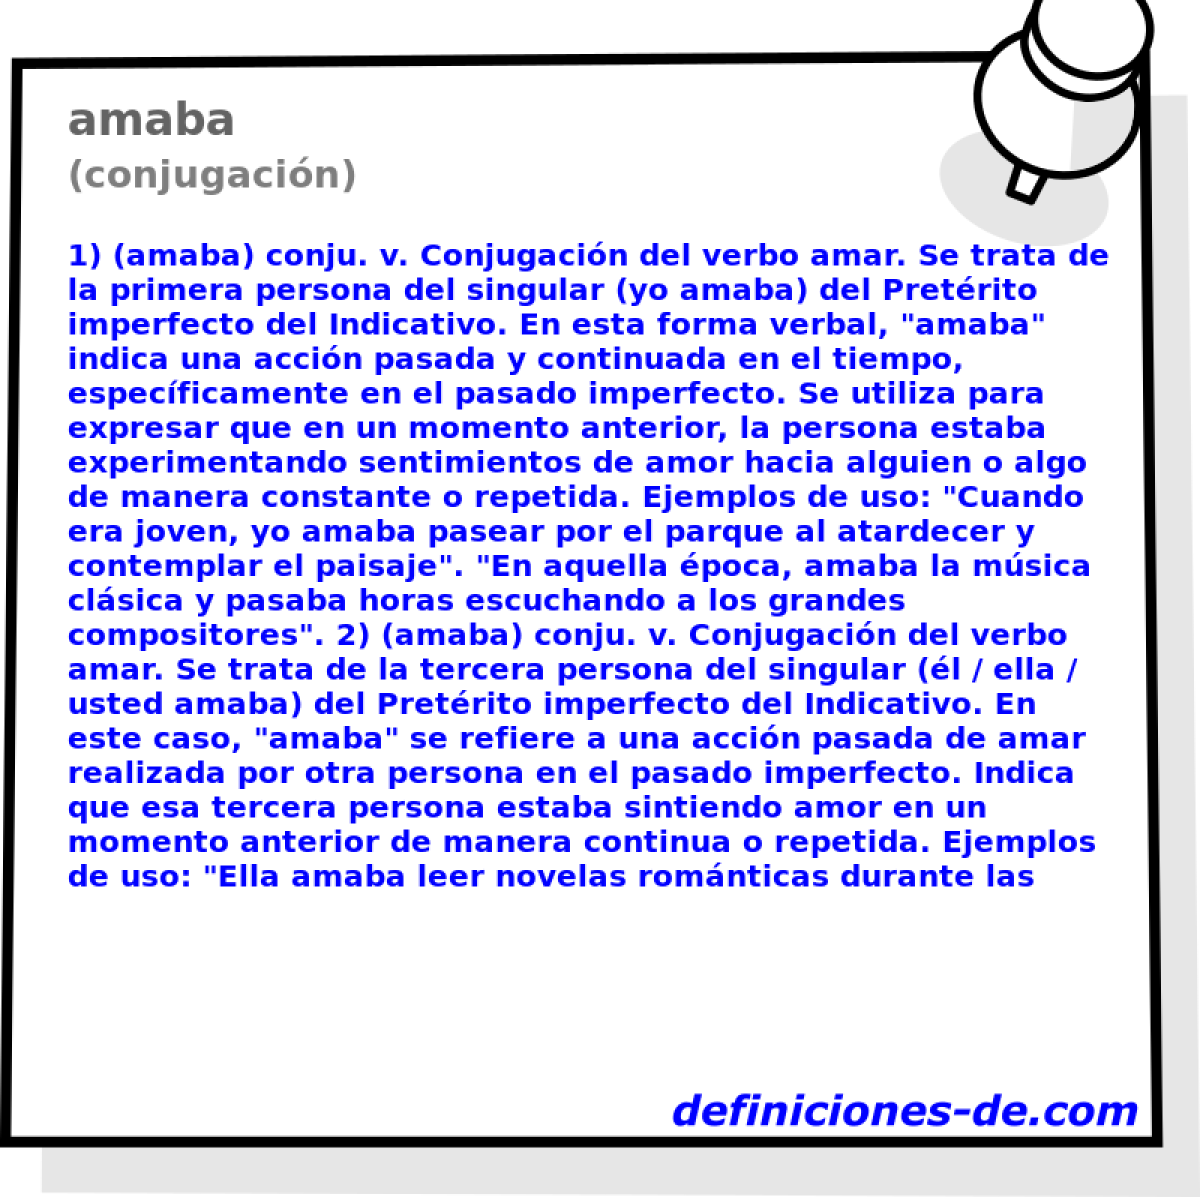 amaba (conjugacin)